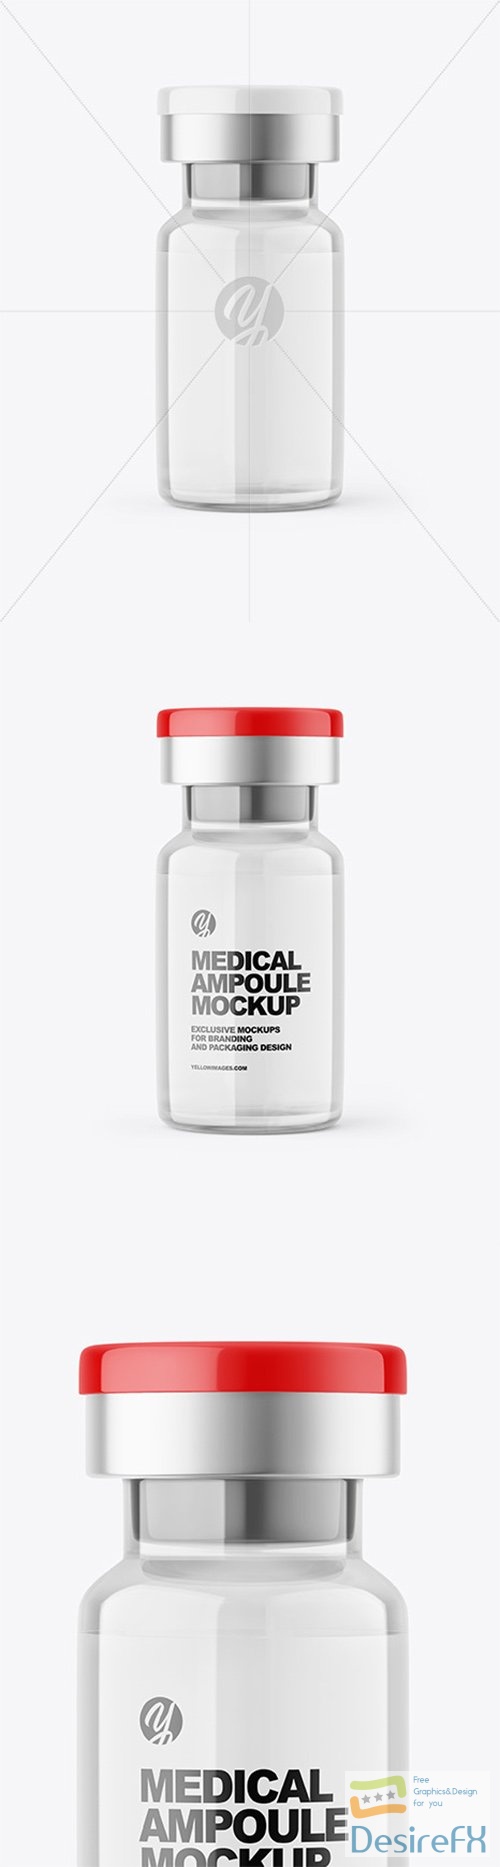 Medical Ampoule Mockup 80634 TIF